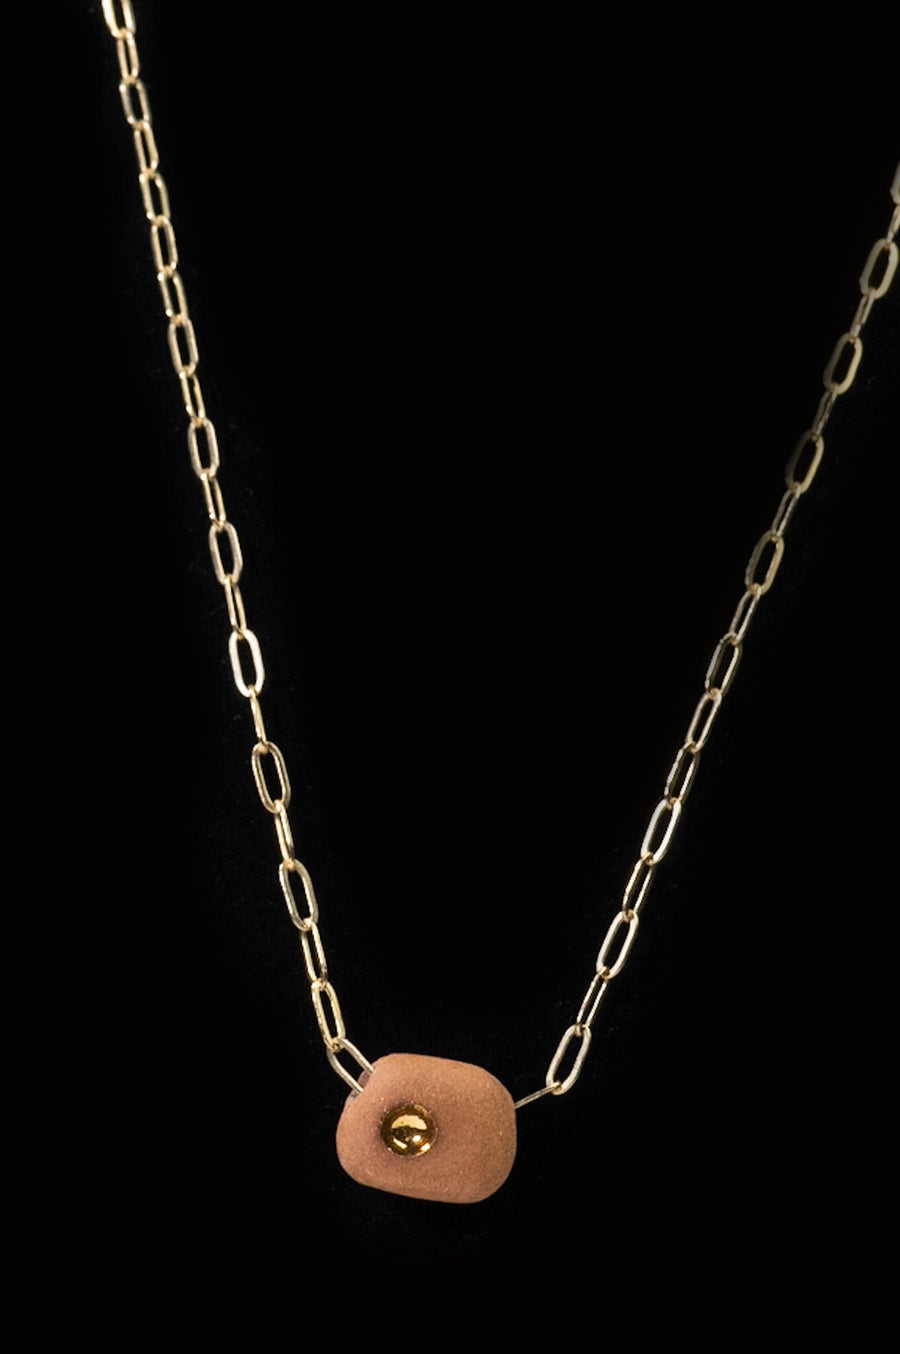 Pebble Necklace by Barrow